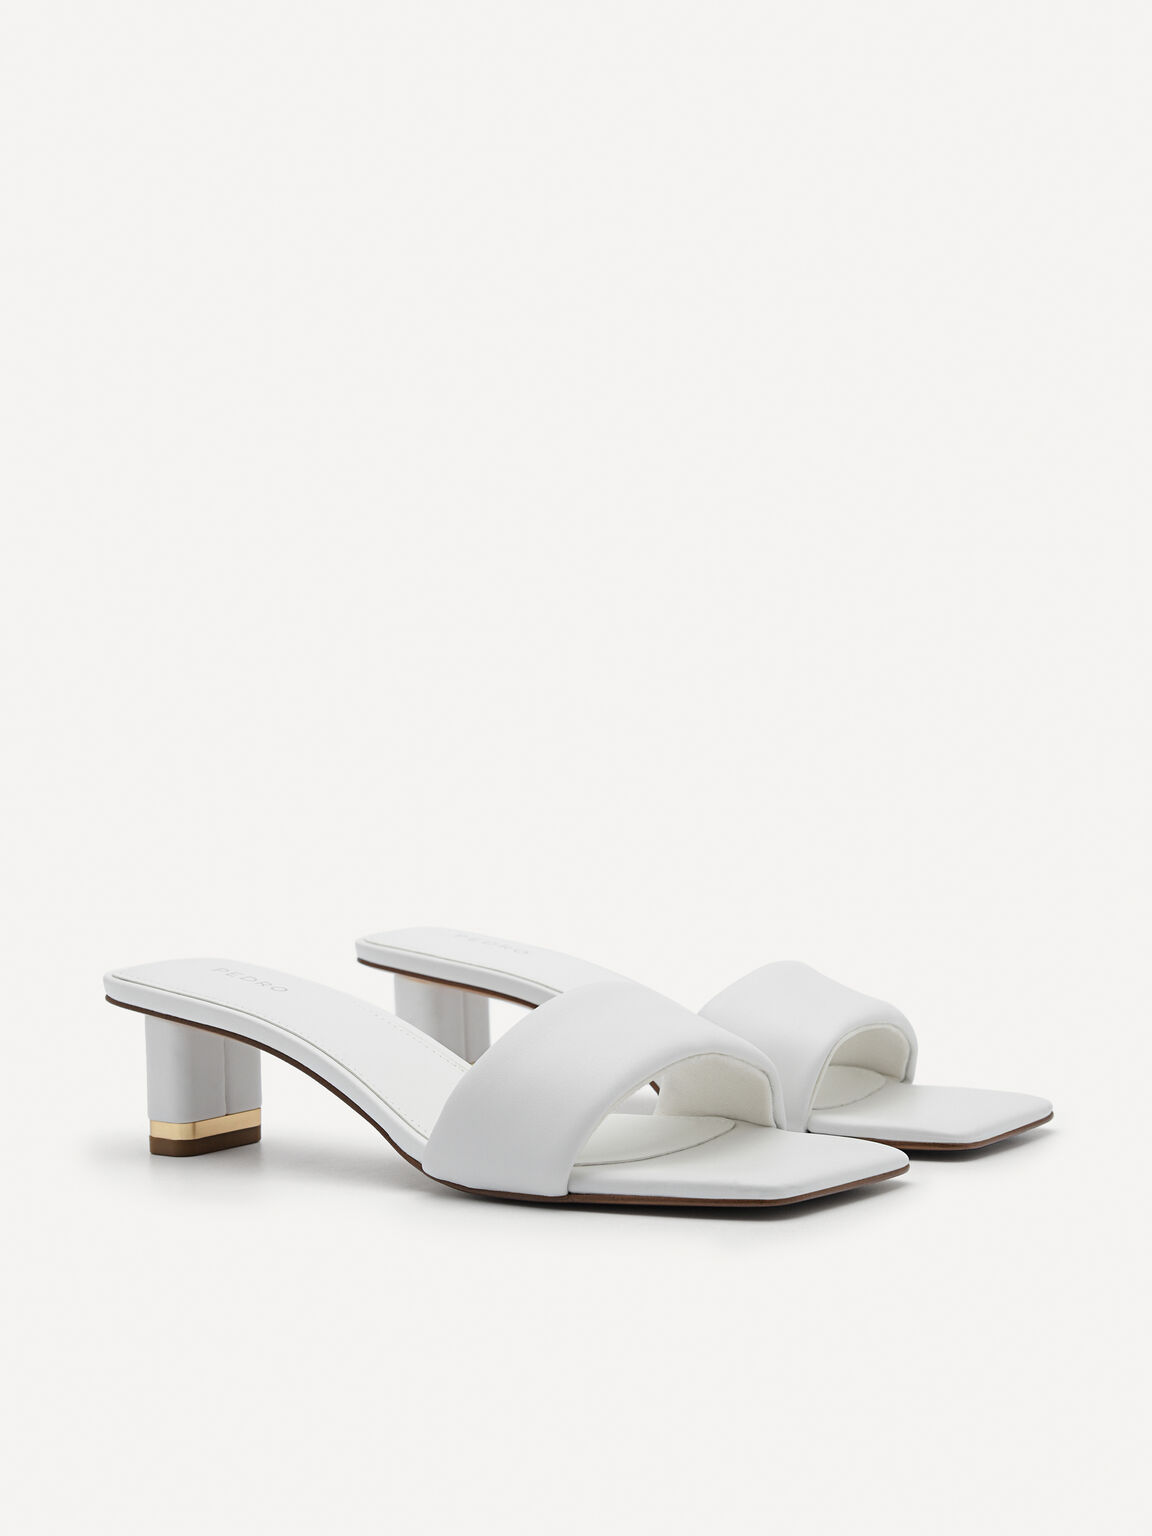 Porto Heel Sandals, White, hi-res